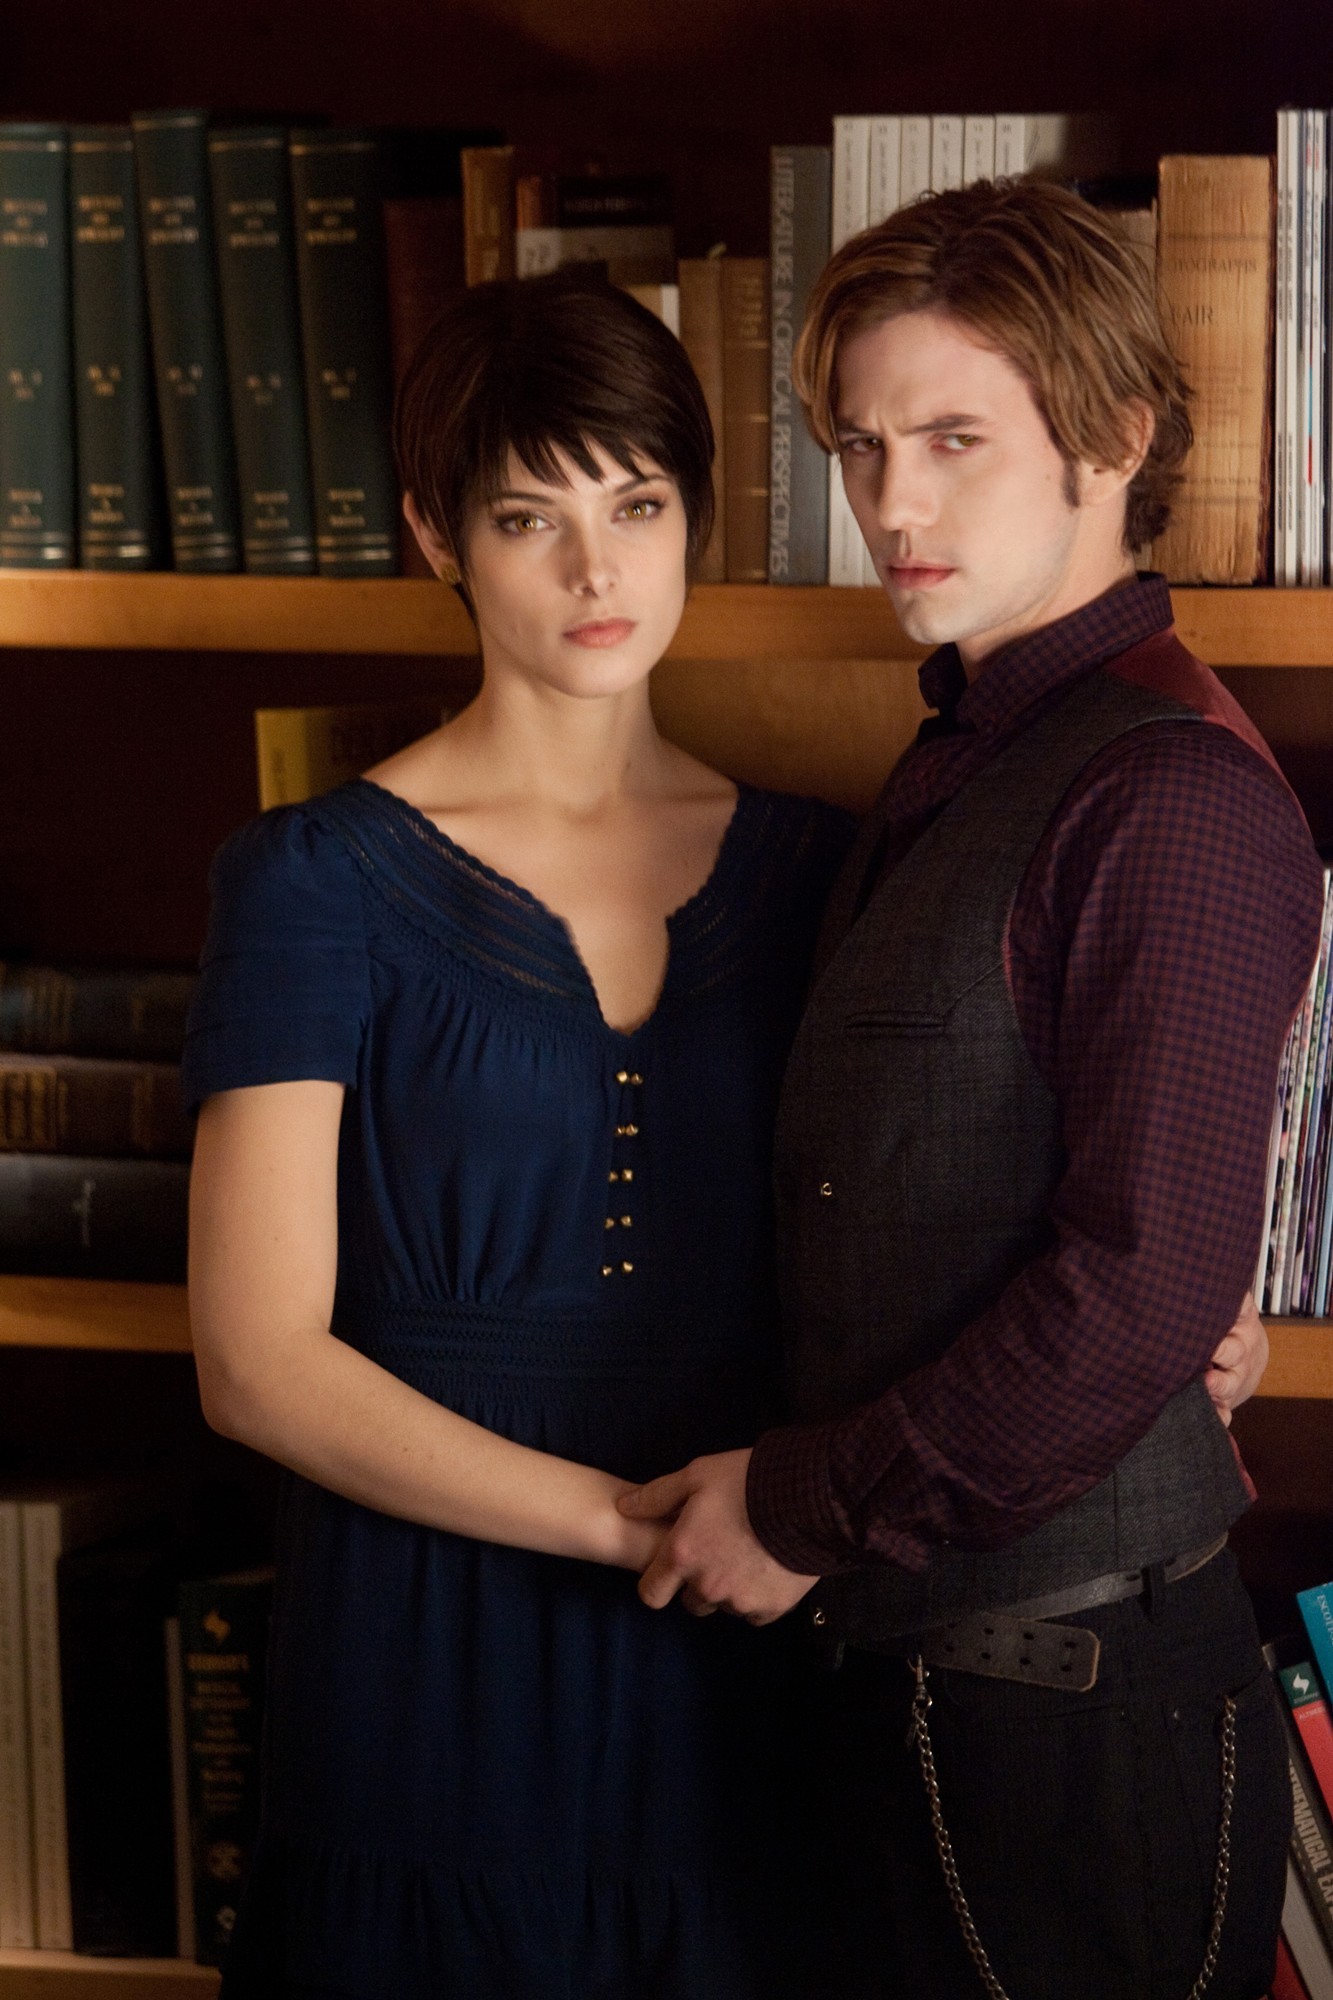 Ashley Greene stars as Alice Cullen and Jackson Rathbone stars as Jasper Hale in Summit Entertainment's The Twilight Saga's Breaking Dawn Part II (2012)